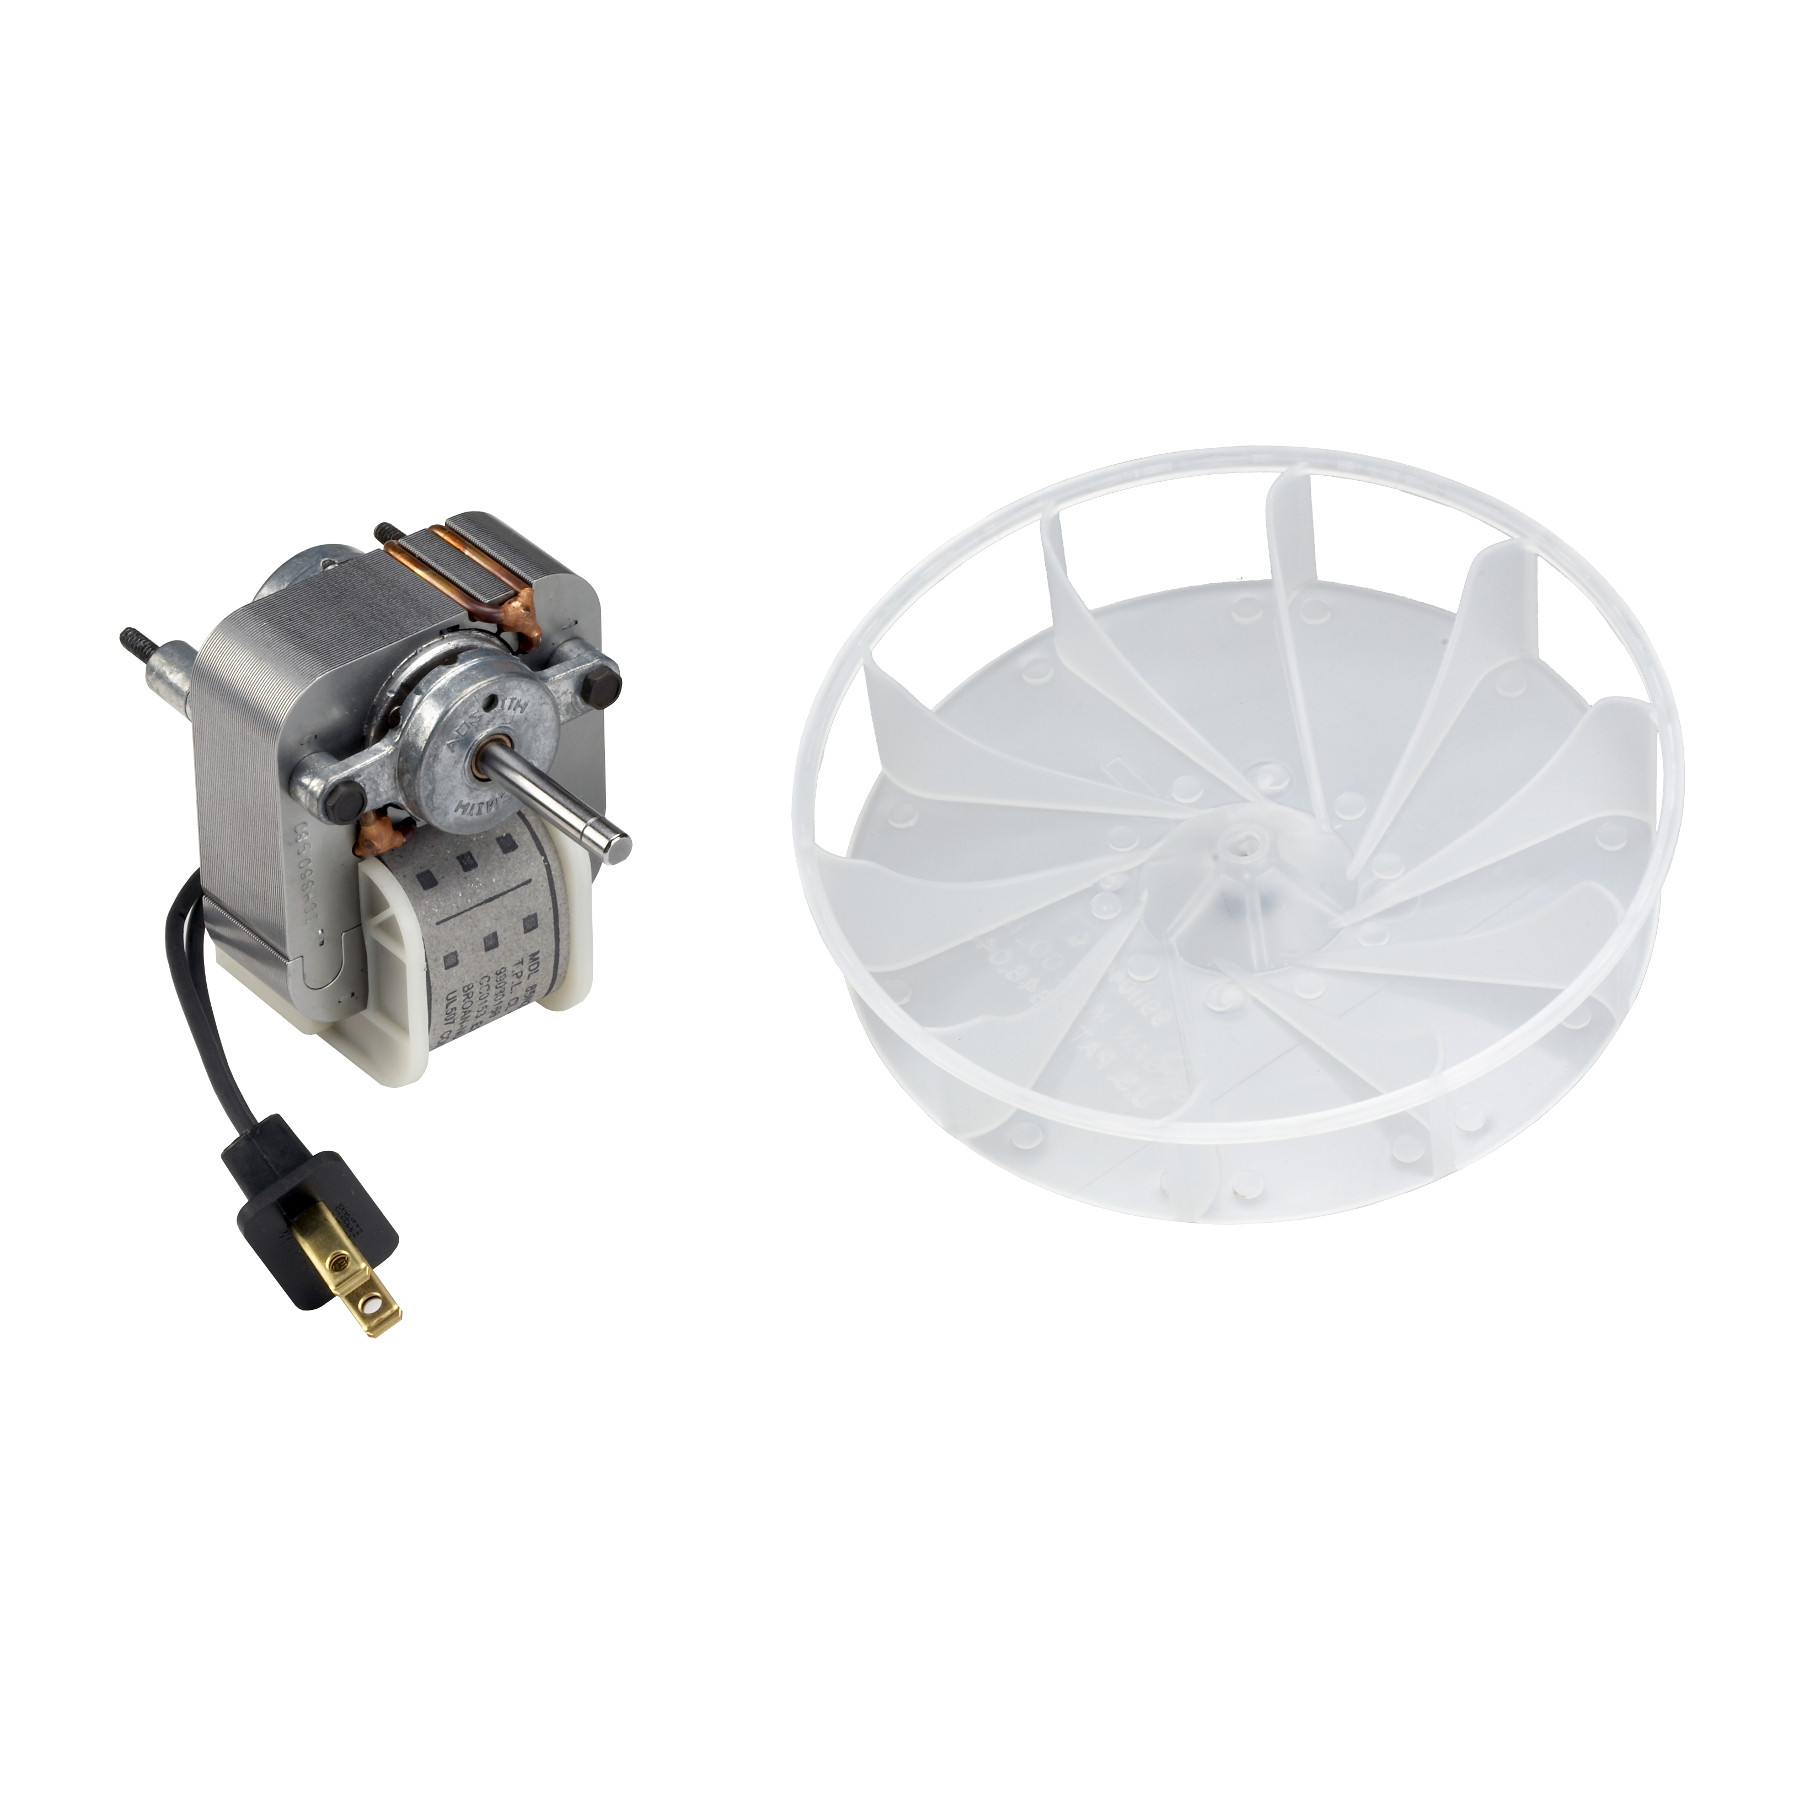 Broan-NuTone® Genuine Replacement Motor/Wheel for 70 CFM Bathroom Fans, Fits Select Models